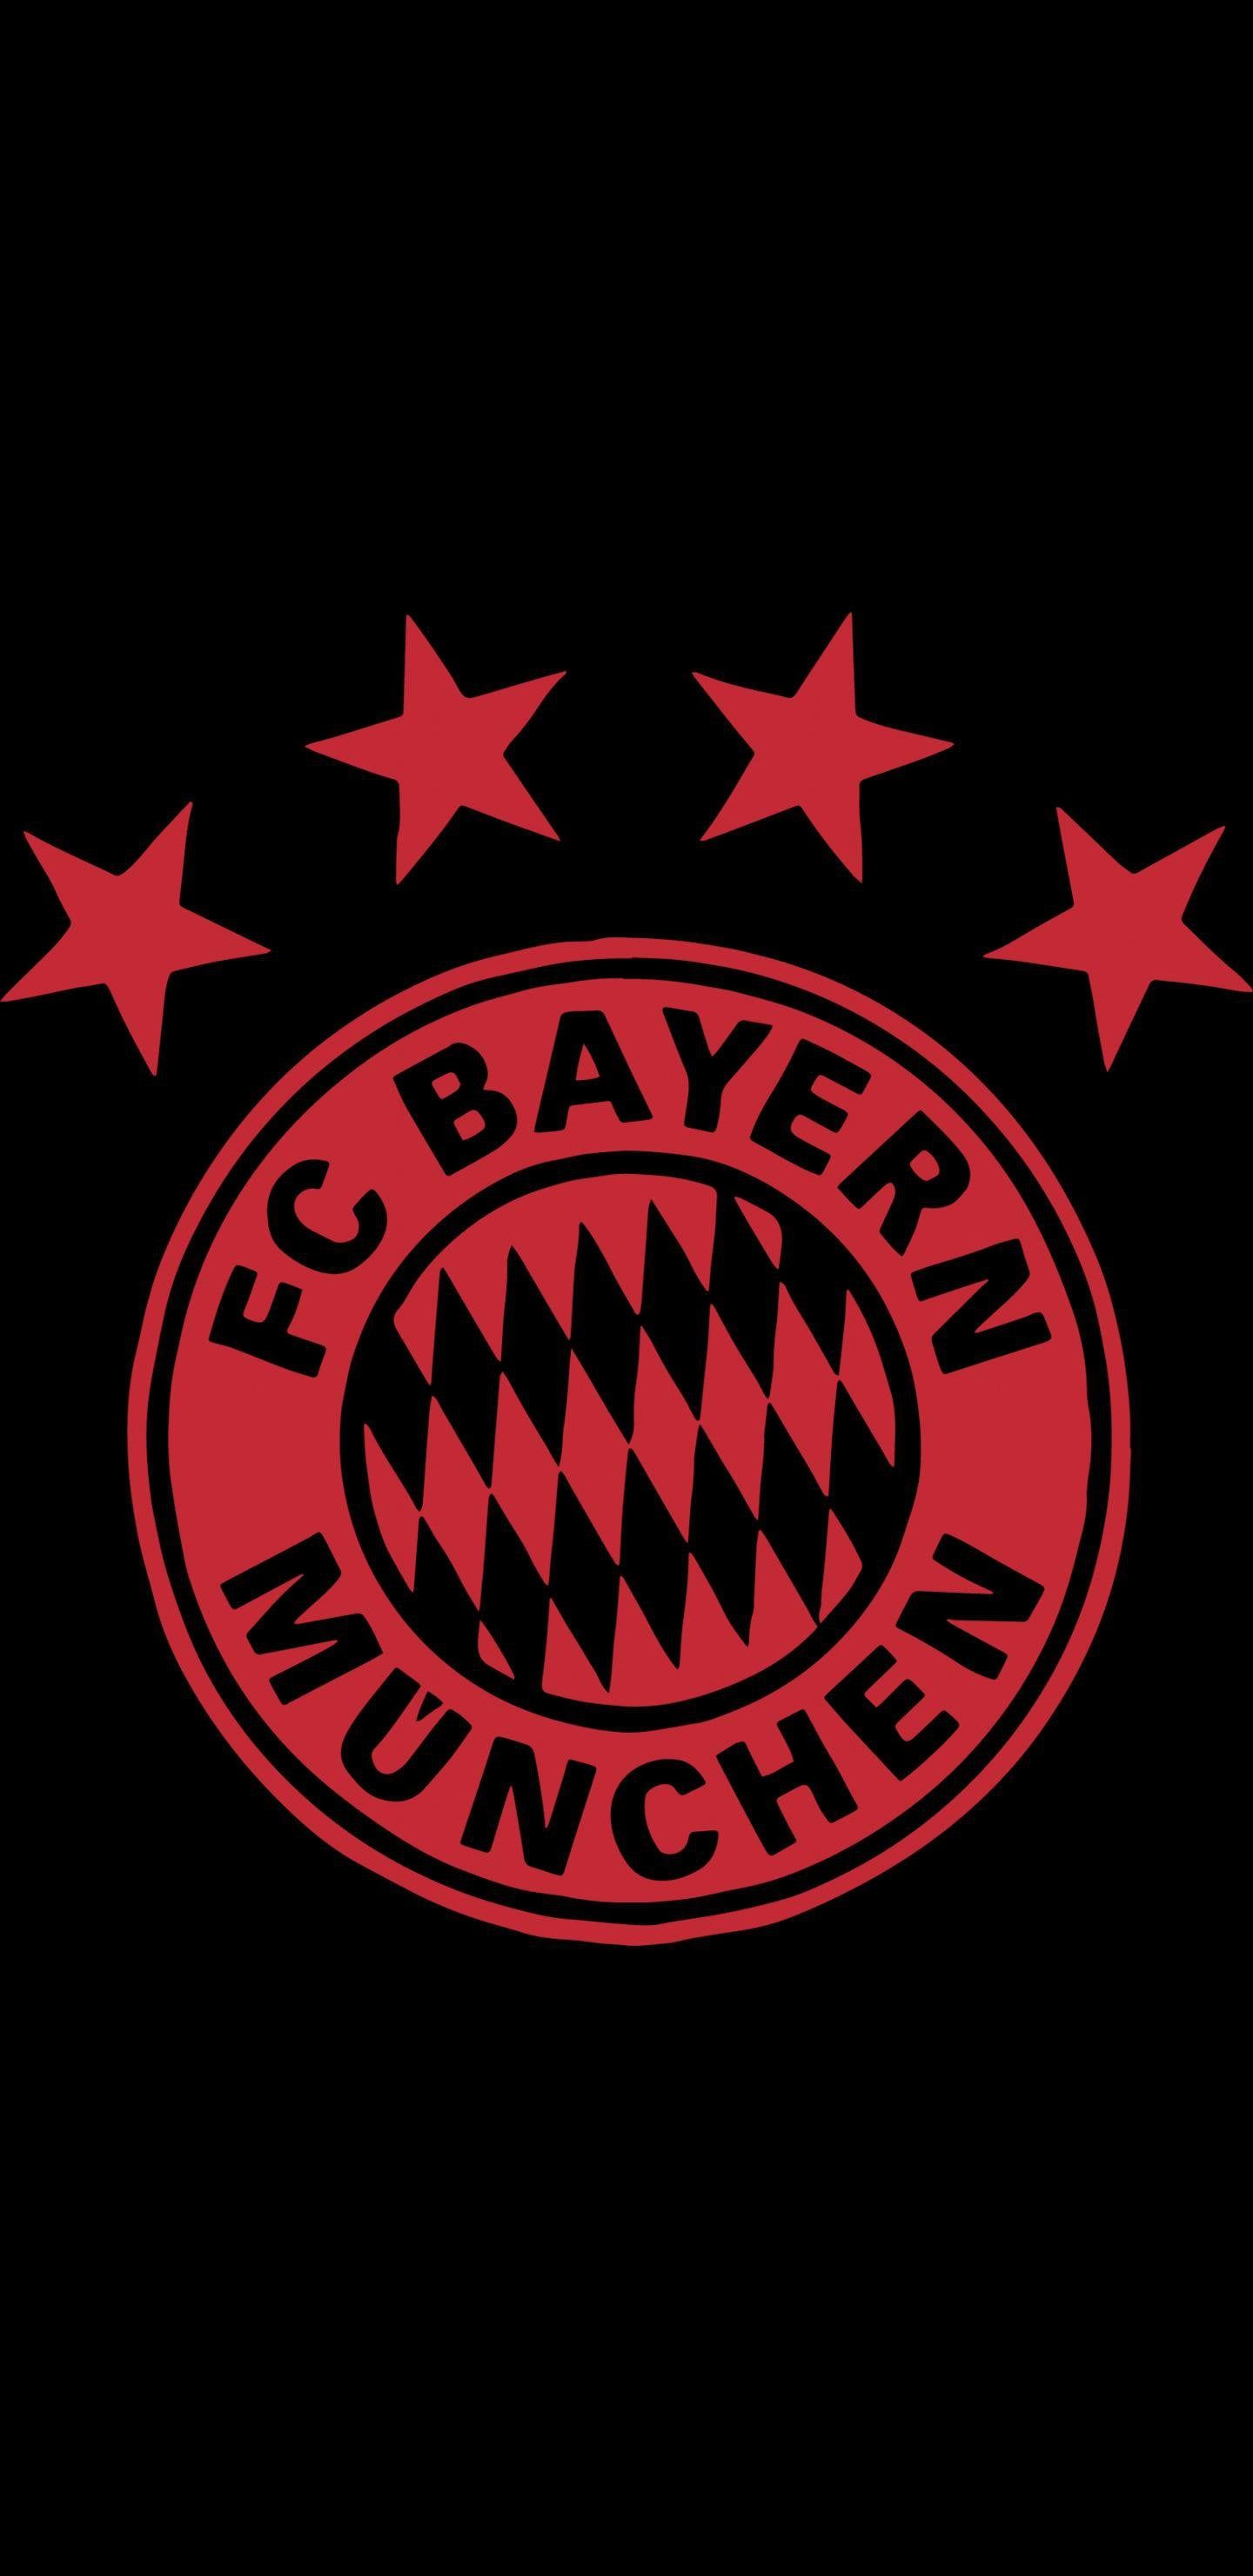 View Fc Bayern Munich Wallpapers 2020 Background